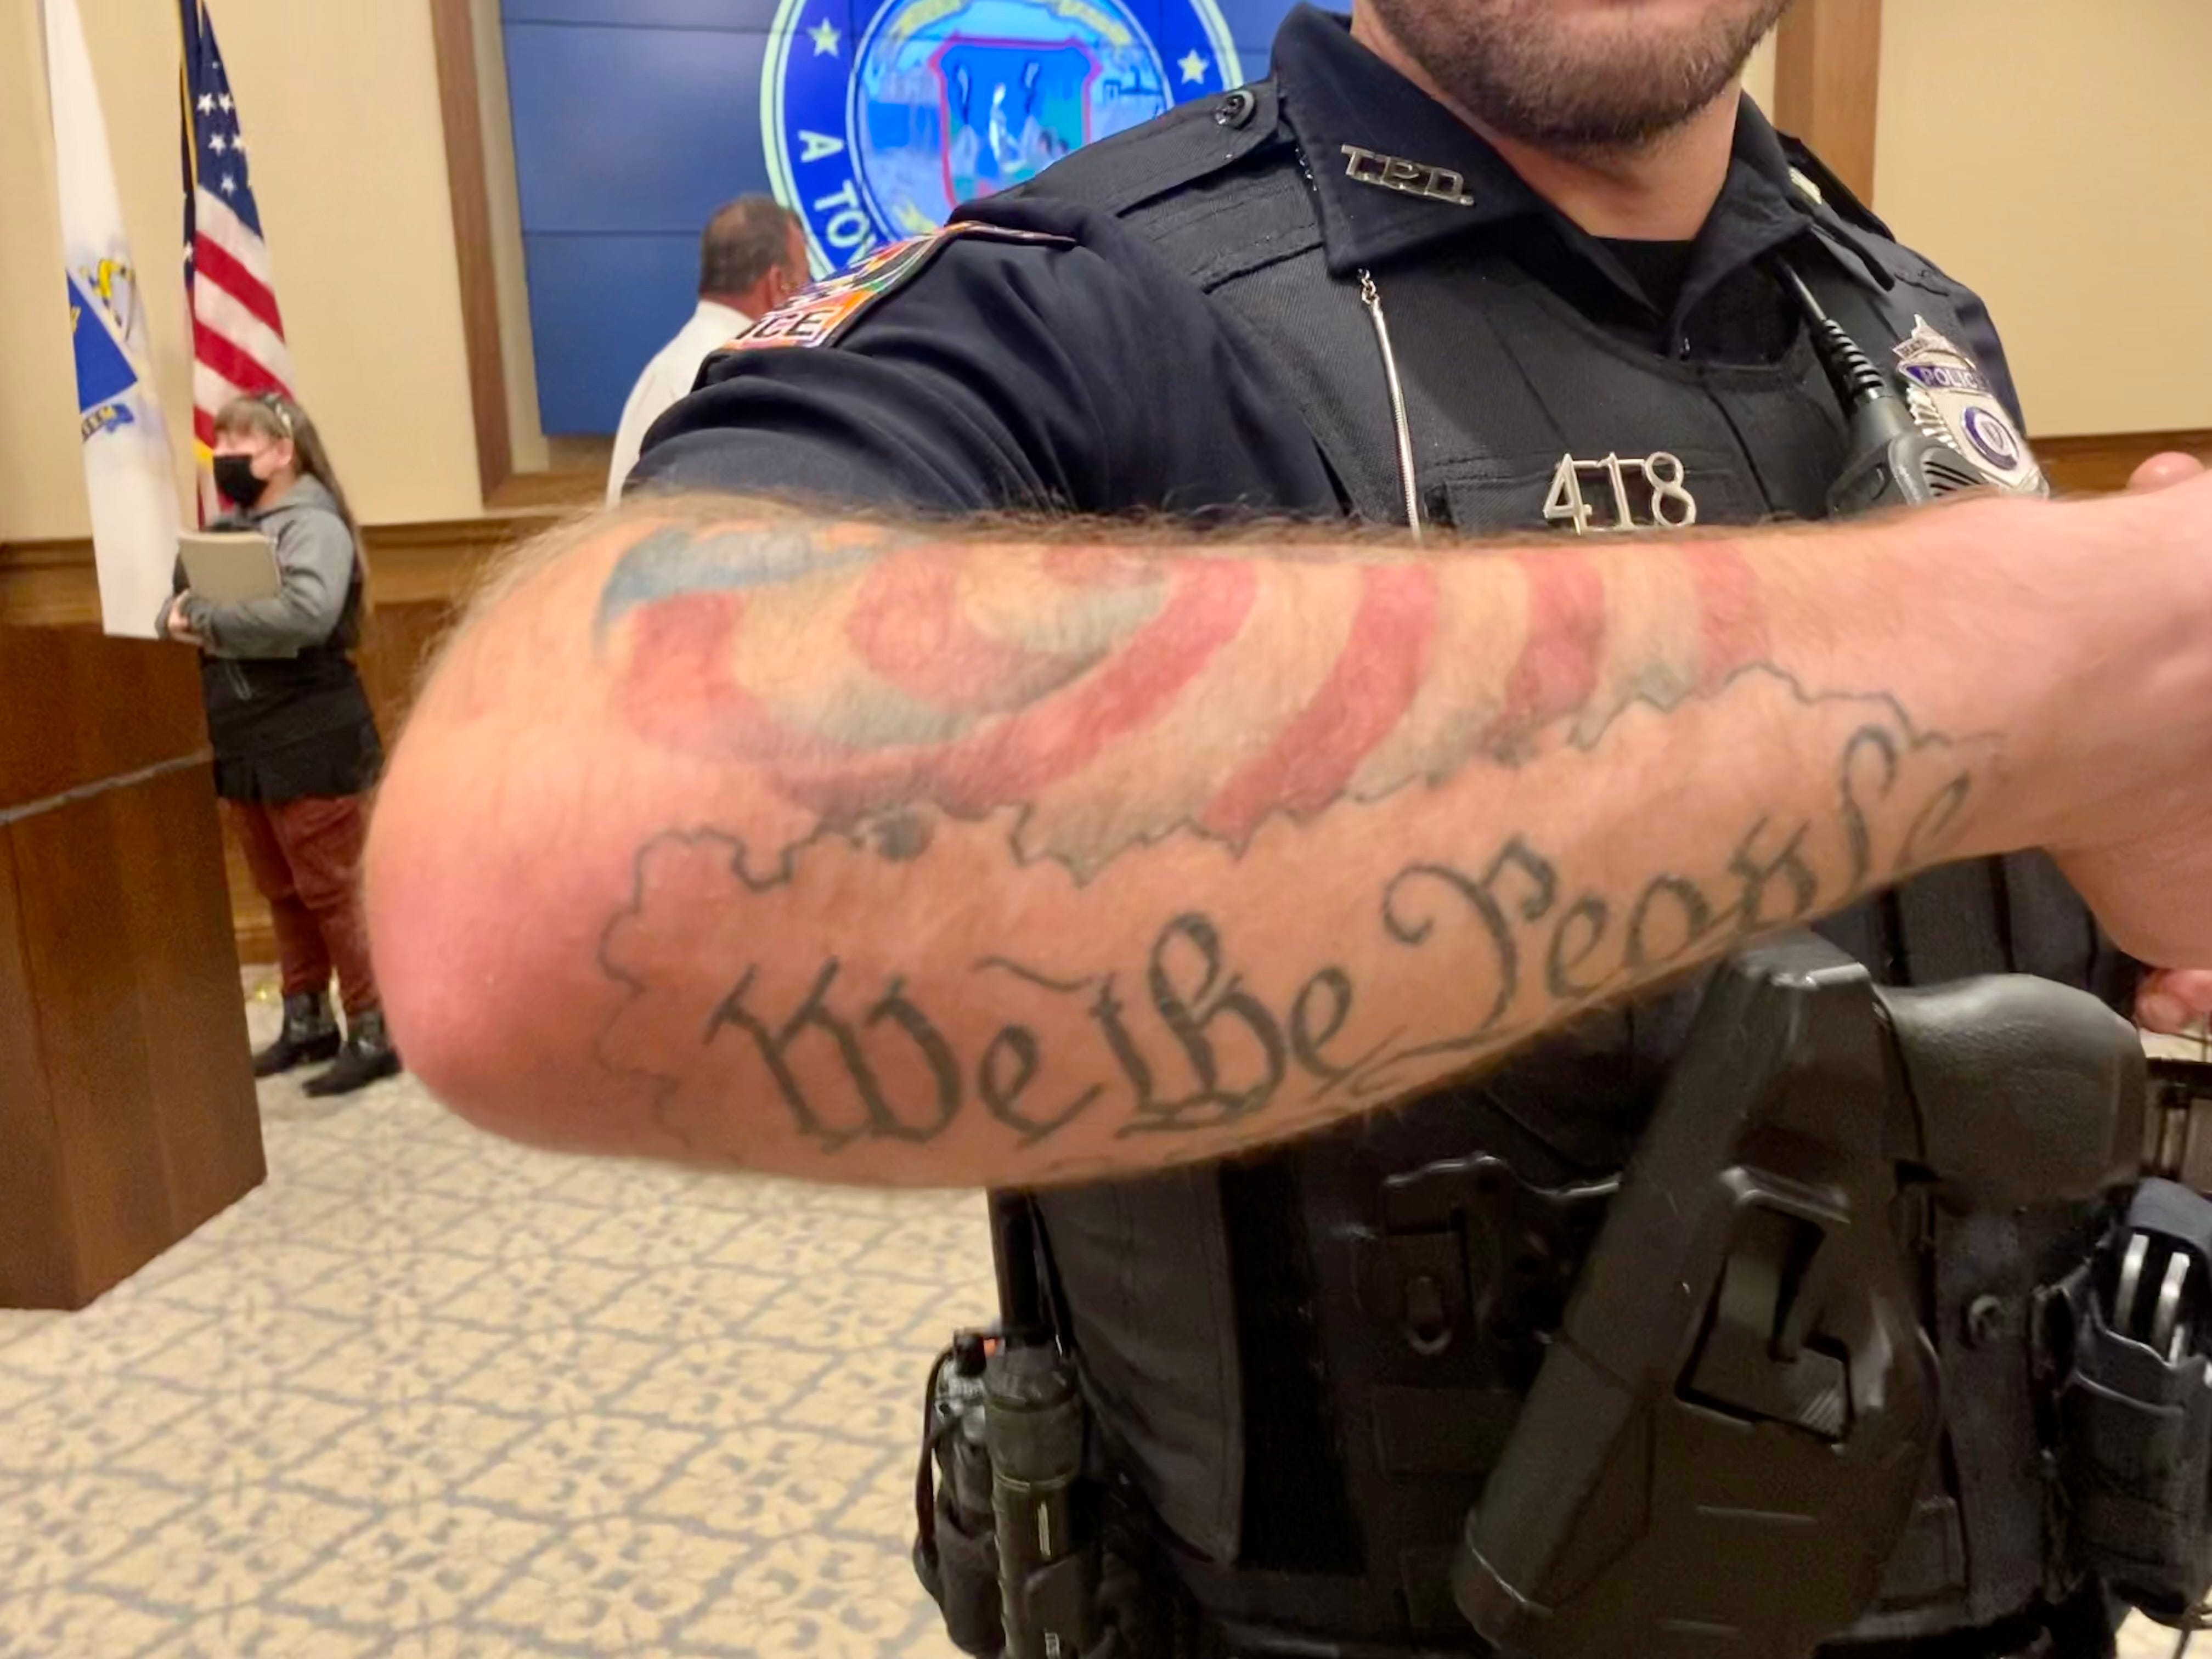 Taunton tattoos: Police Chief Ed Walsh wants policy